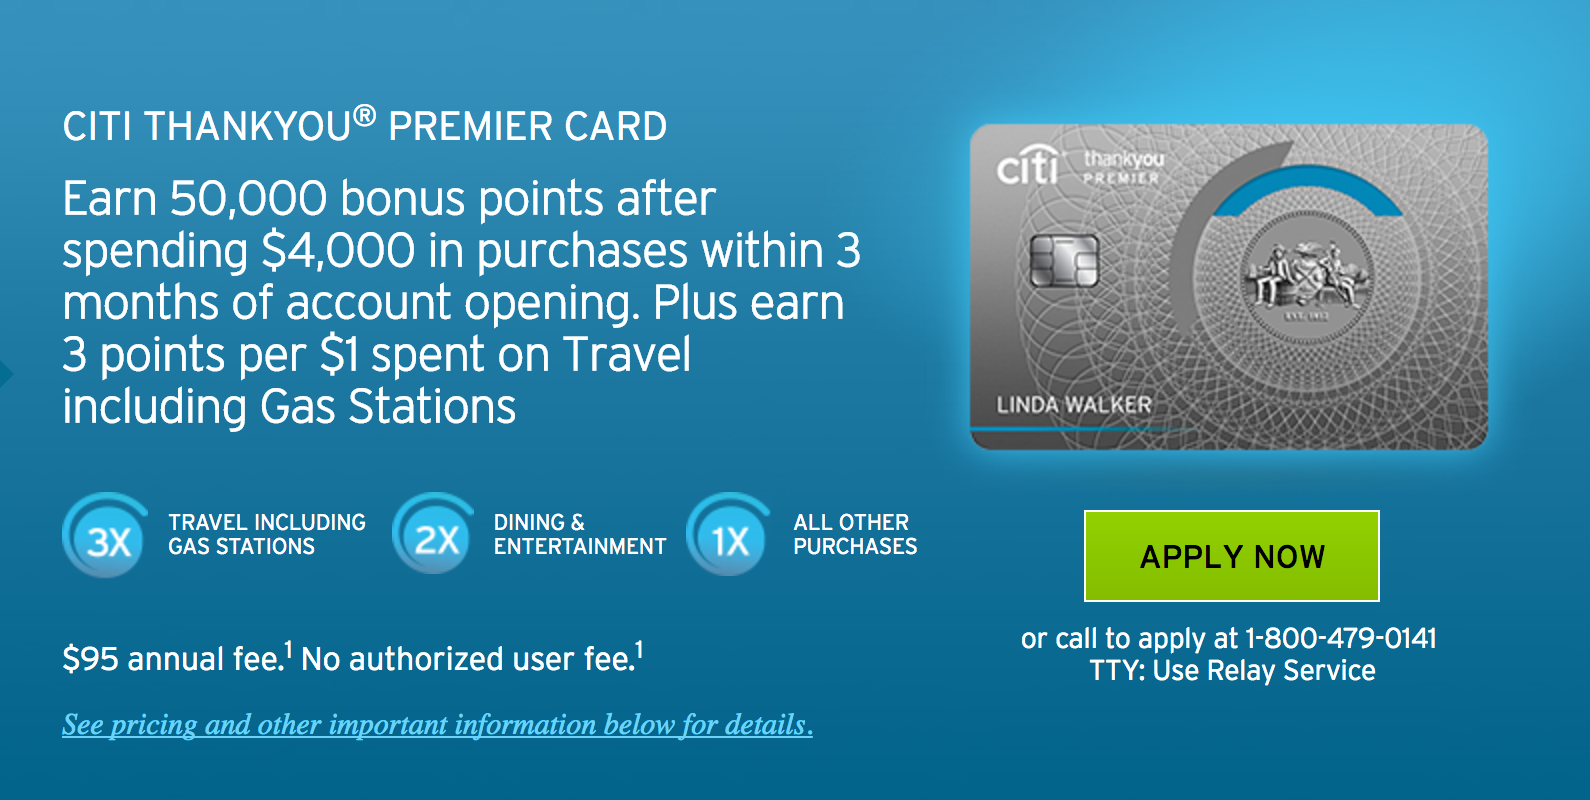 Citi® ThankYou® Premier Card 50K Sign-Up Bonus Now Available Online - UponArriving1590 x 800